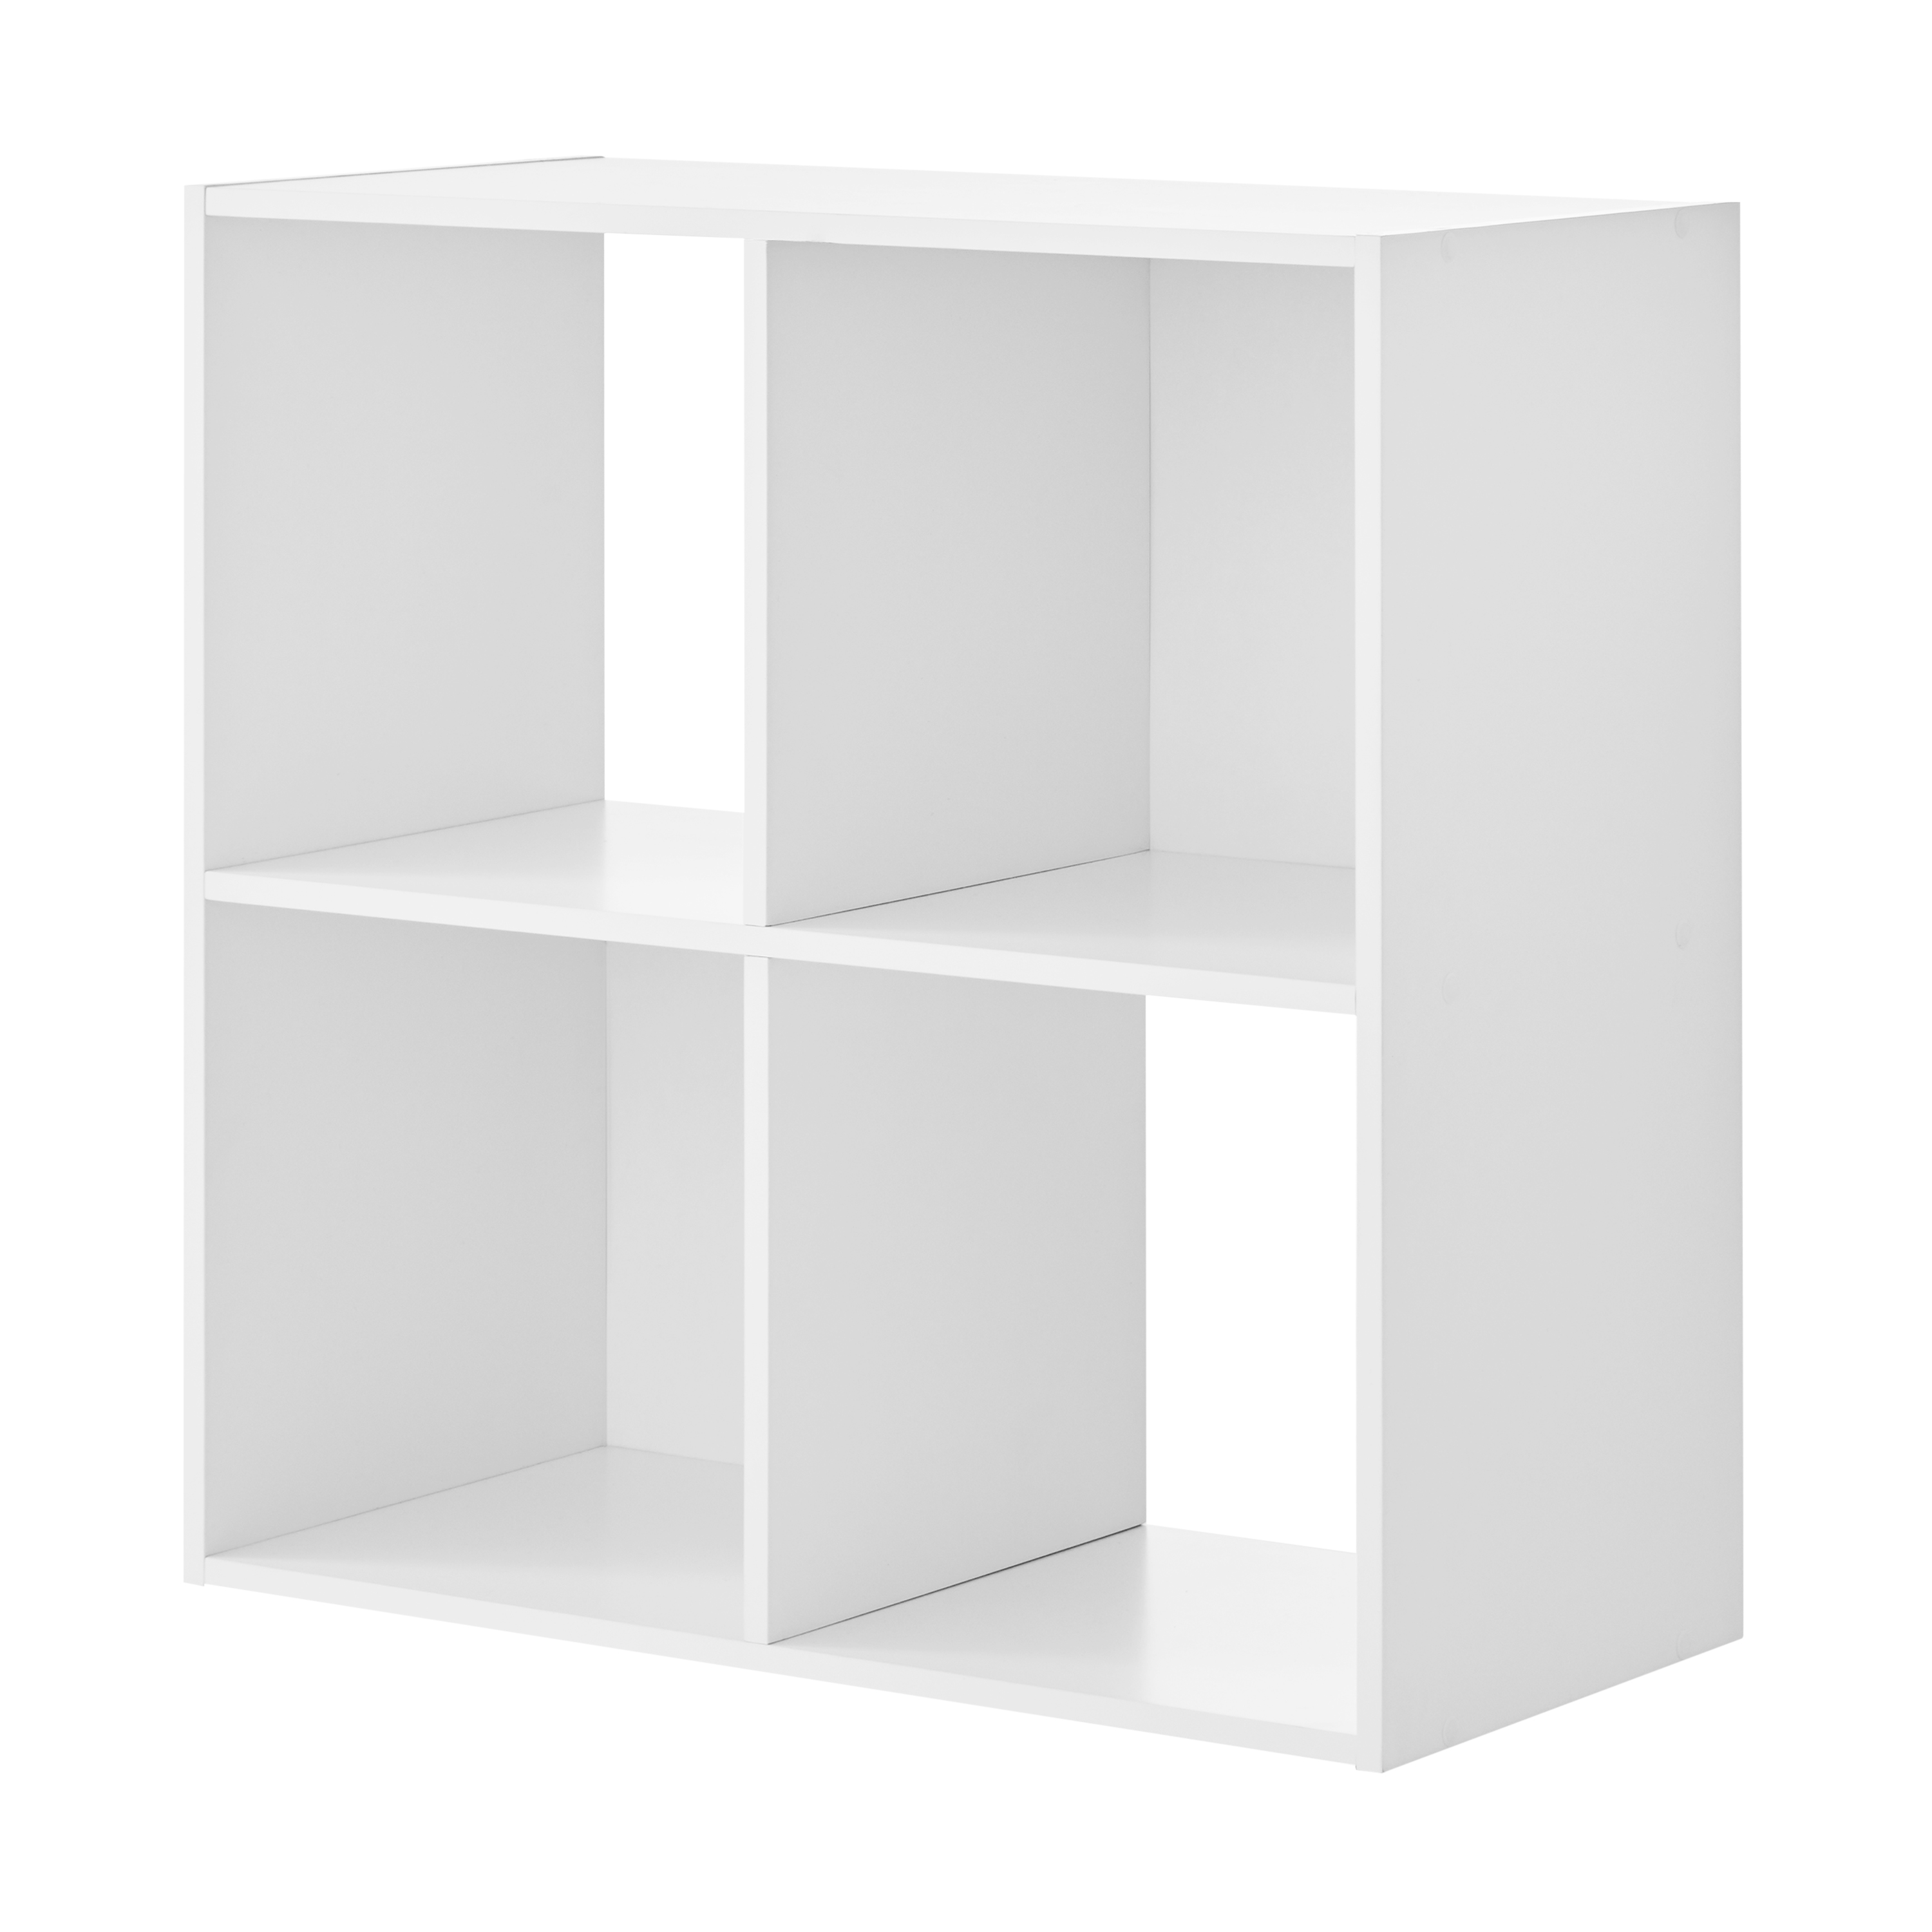 Your Zone 4-Cube Storage Organizer, White - image 3 of 7